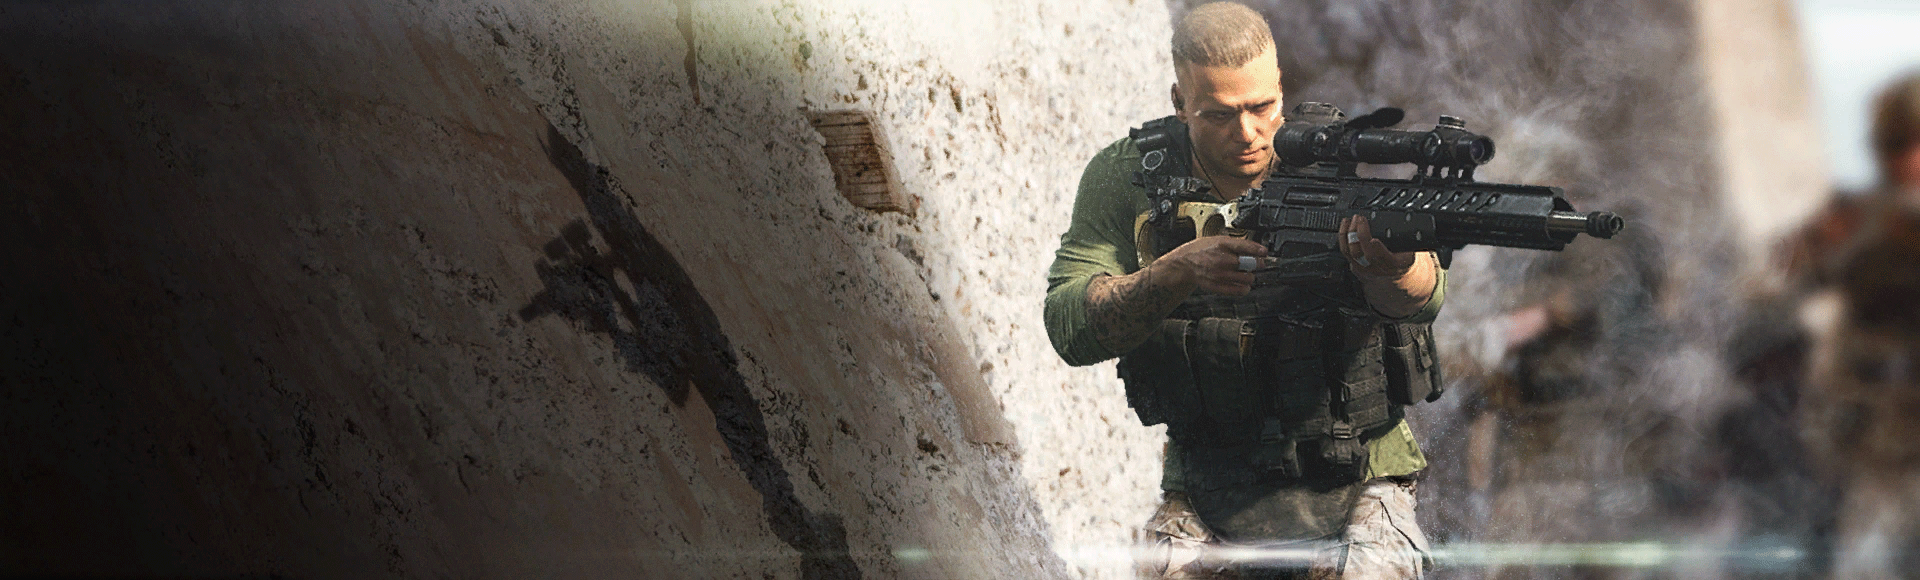 Call of Duty: Modern Warfare season one DLC, battle pass detailed - Polygon